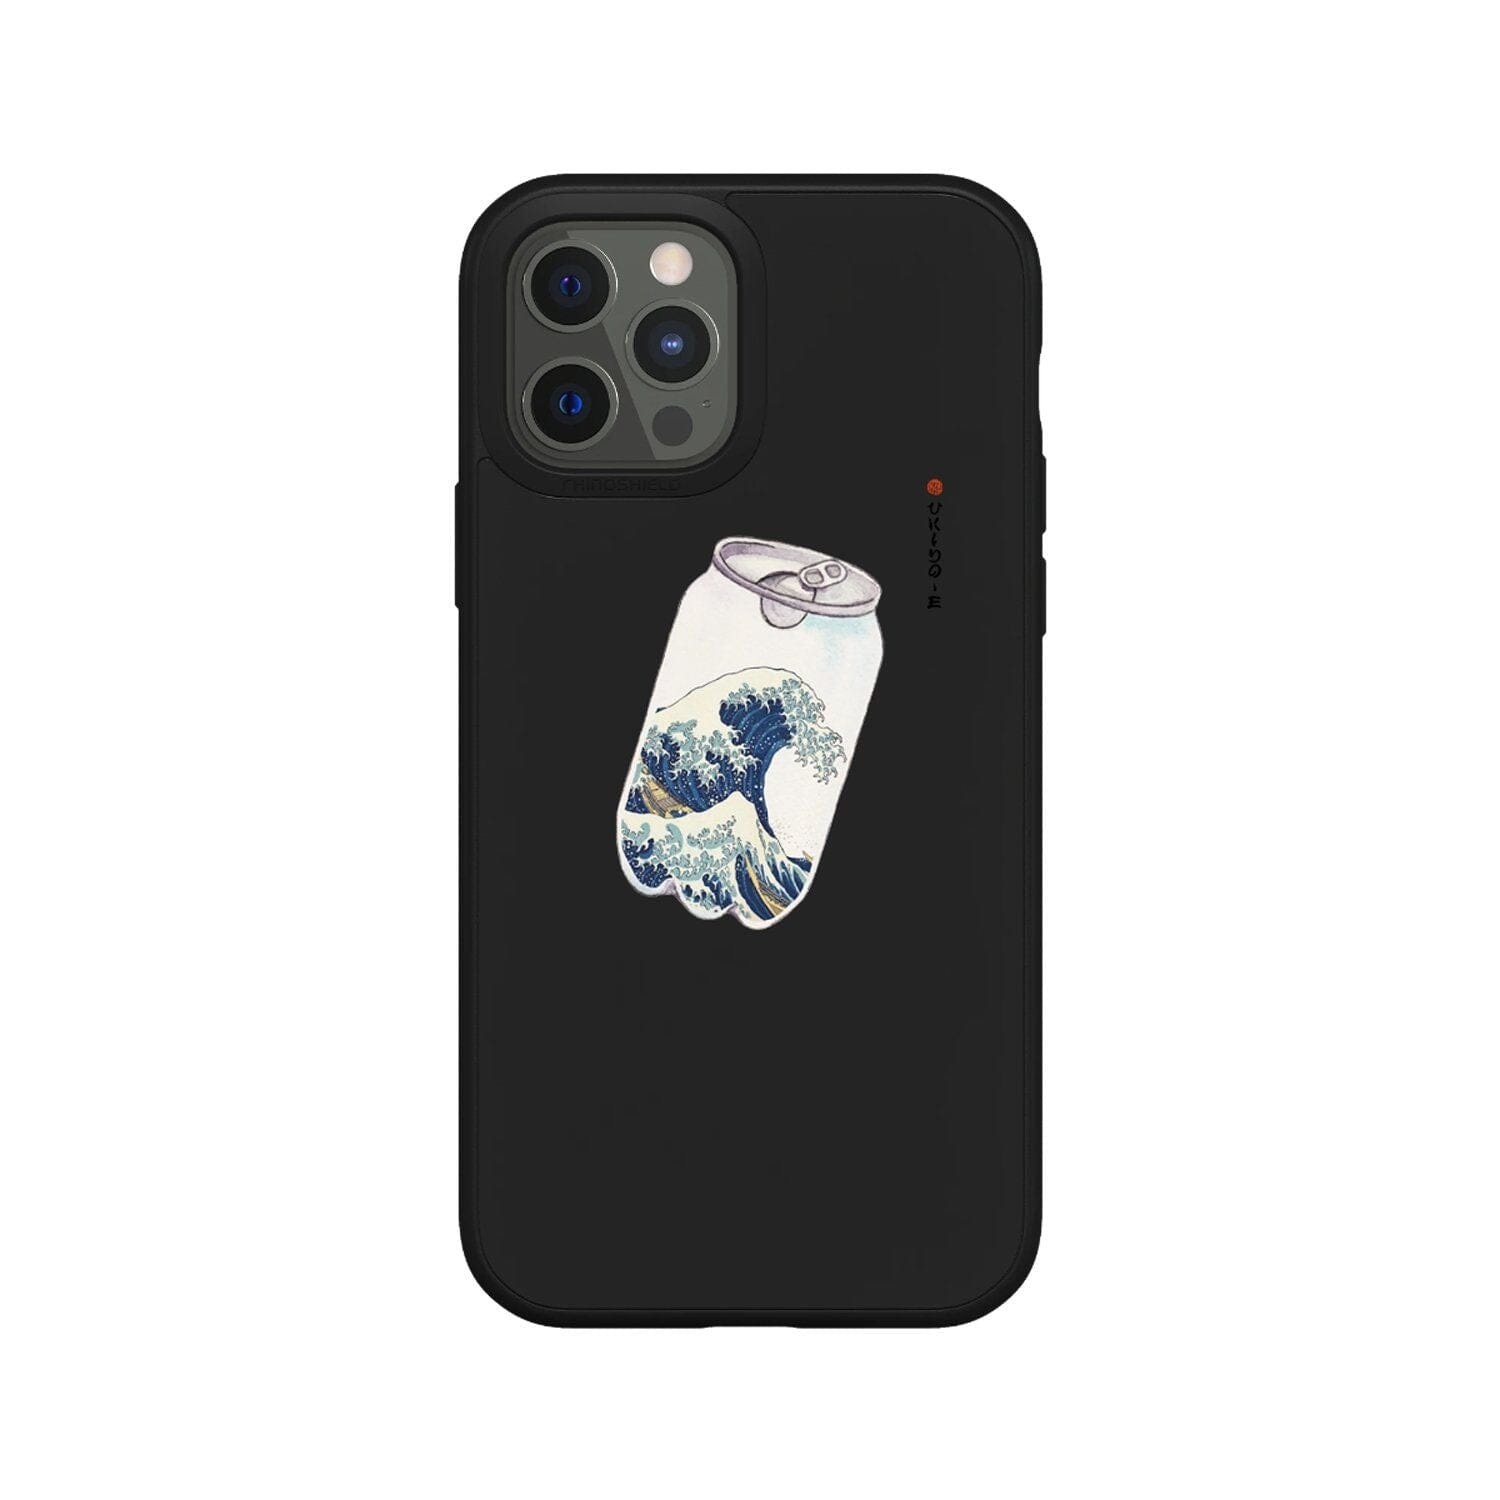 RhinoShield SolidSuit Design Case for iPhone 12 Series (2020) Default RhinoShield iPhone 12 Pro Max 6.7" Black/Micro Tribe 